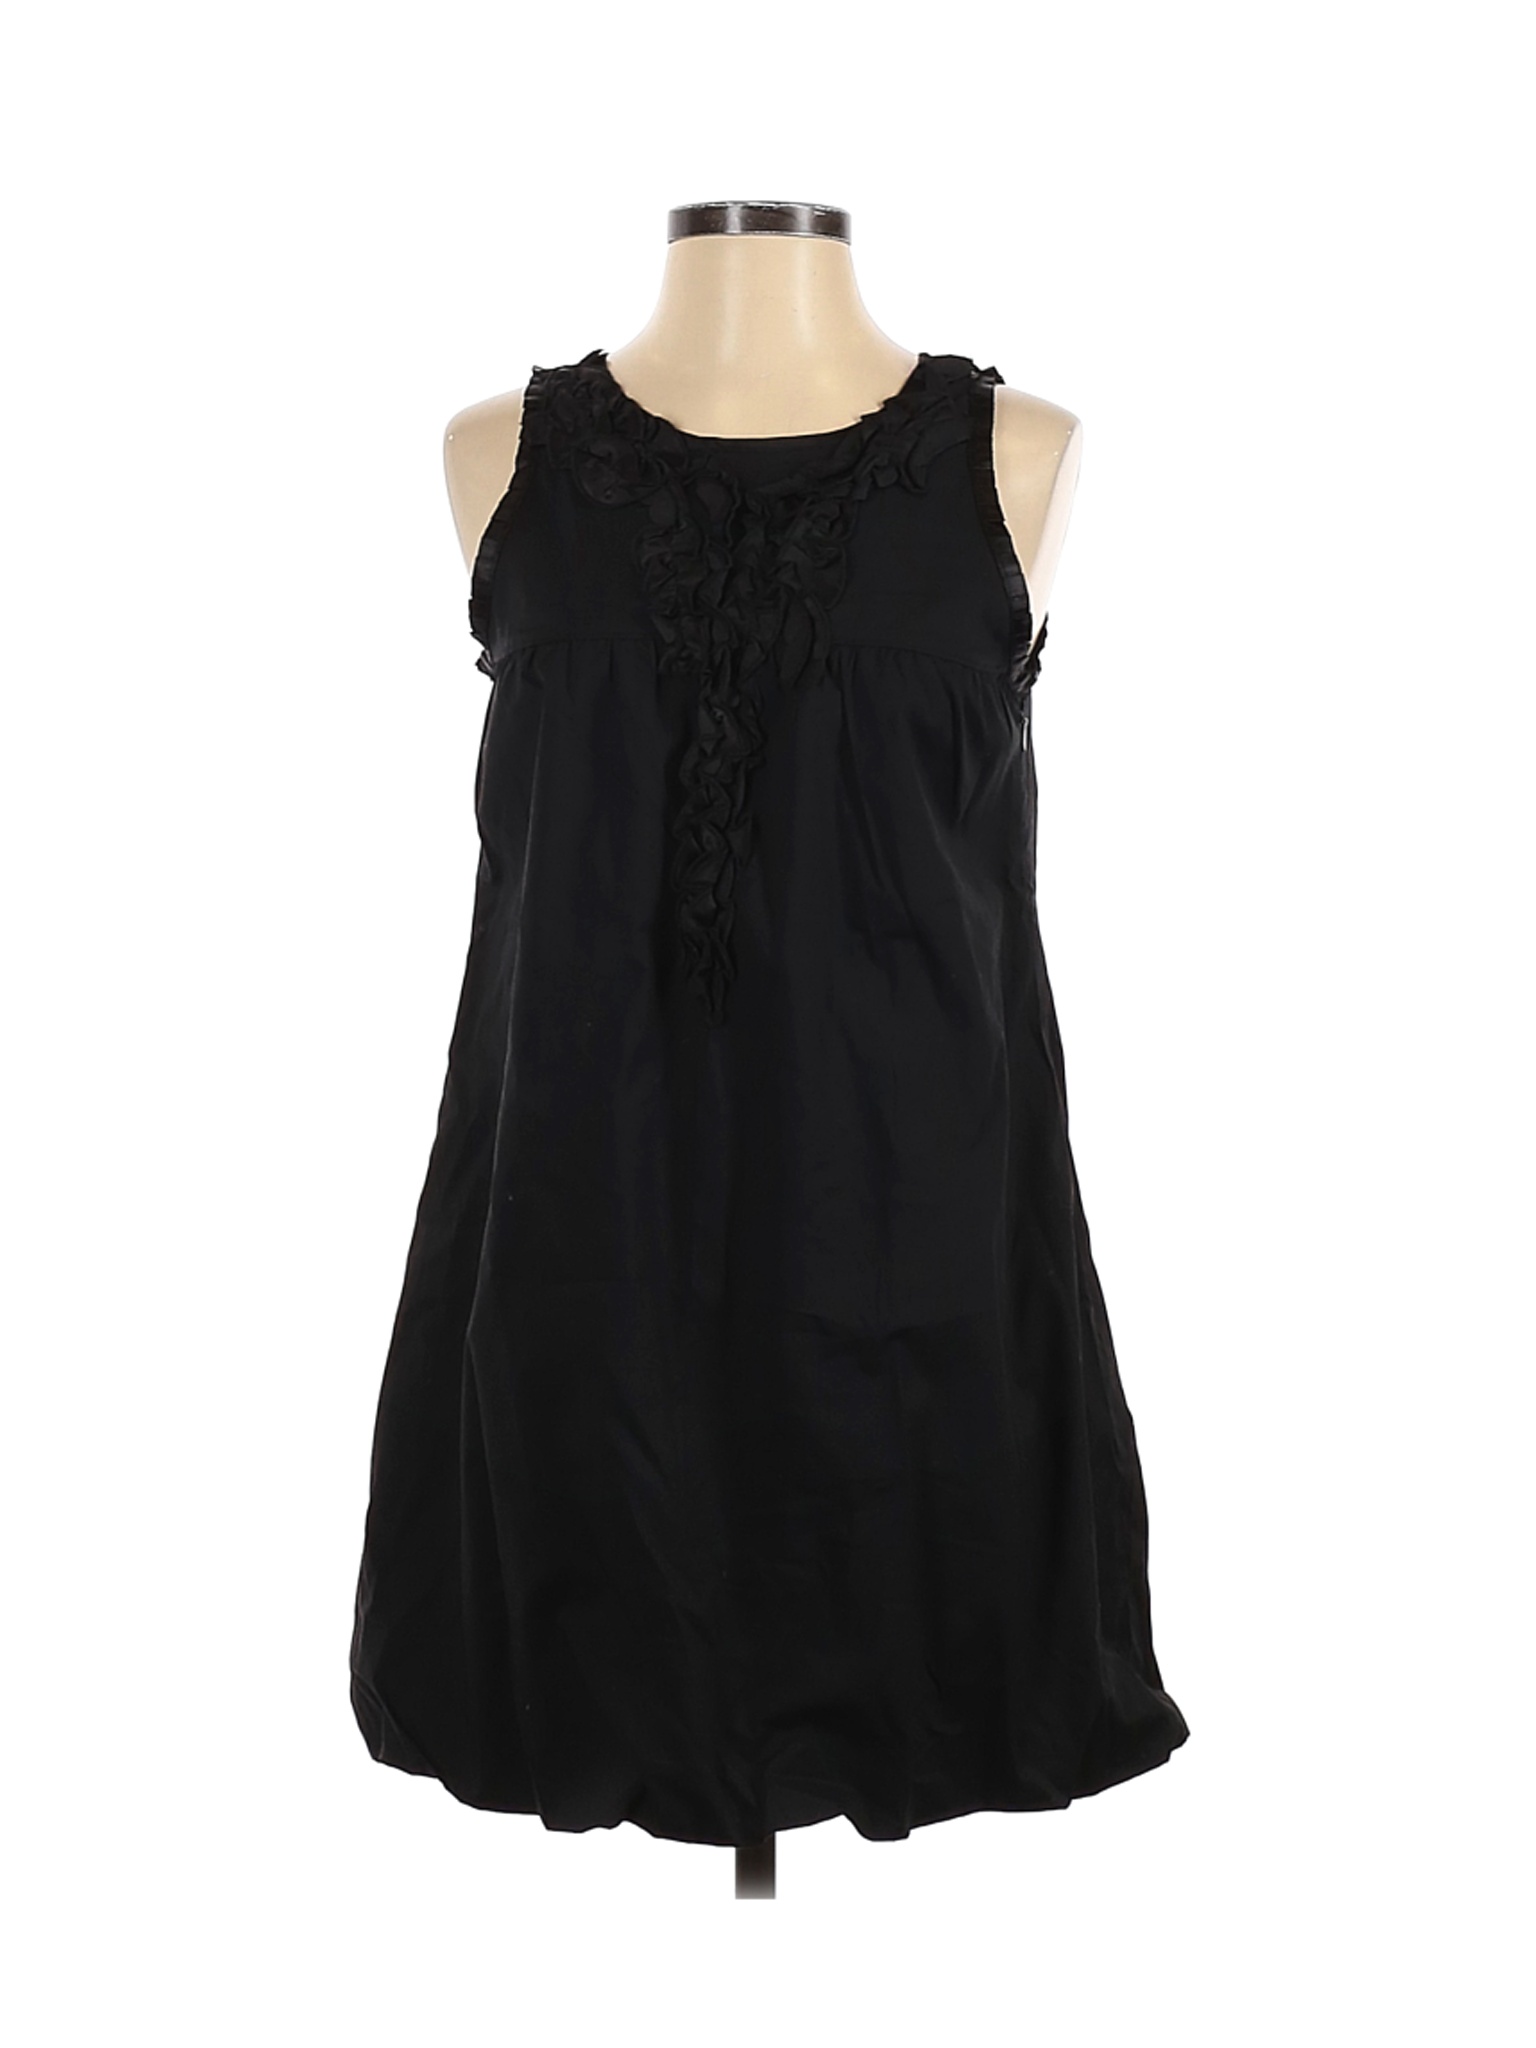 Veeko Women Black Casual Dress 36 eur | eBay